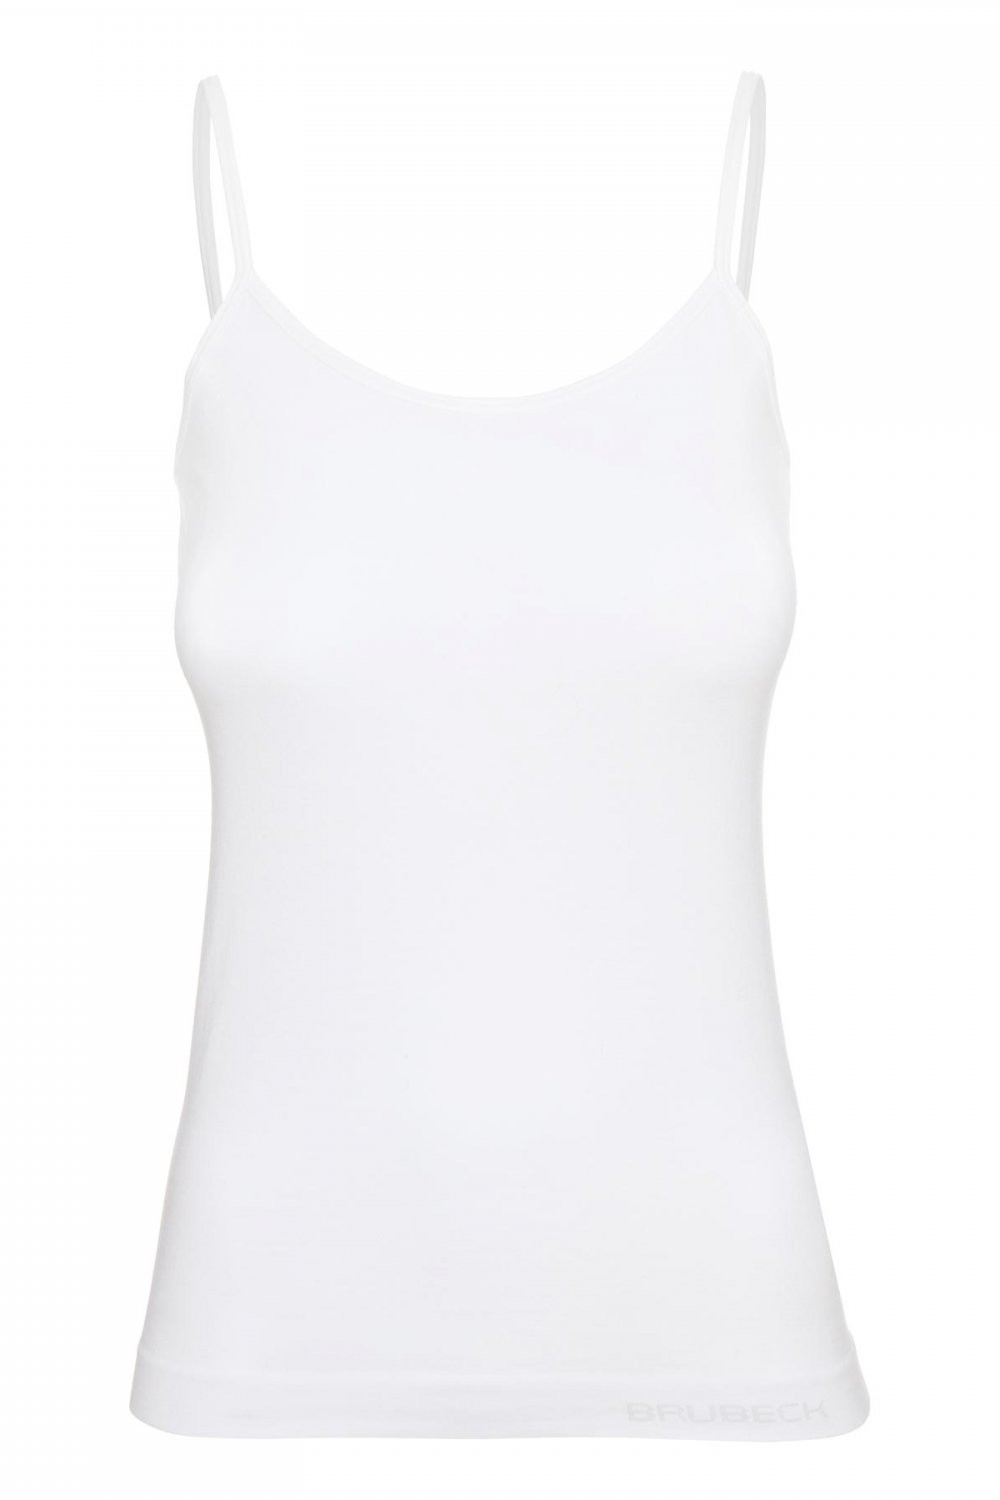 Dámská košilka model 16737981 white Bílá L - Brubeck